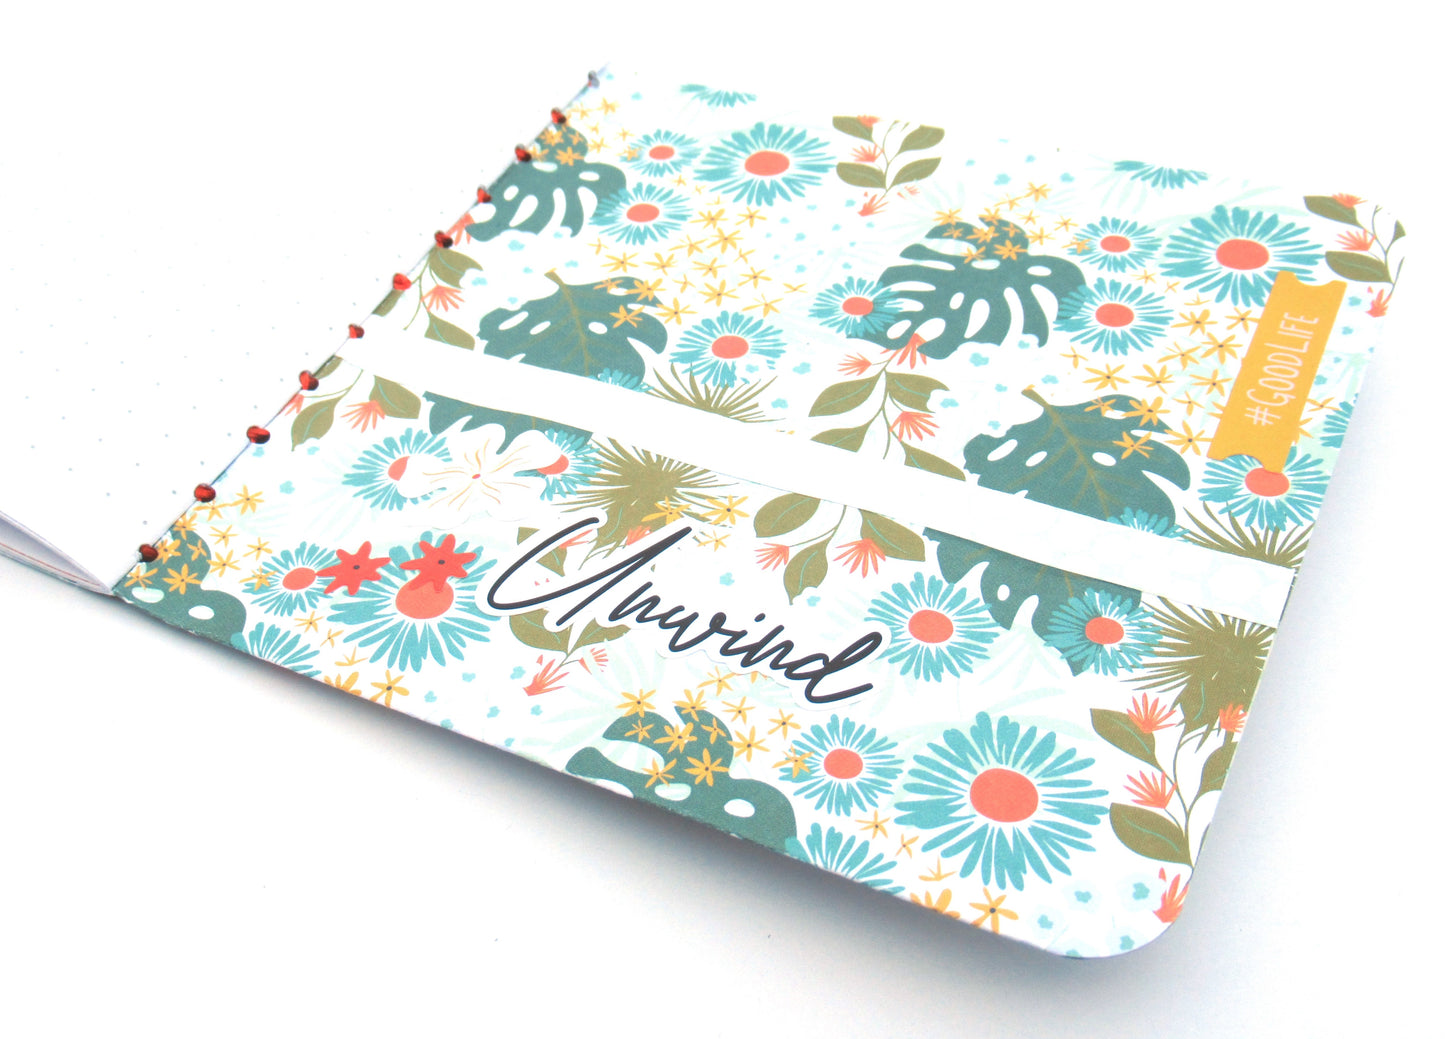 Journal - Handmade JOURNAL - Soft Cover Journal - Handbound Blank Notebook - Gratitude Journal - Tropical Themed Journal - Stationery - Literacy Project - 107